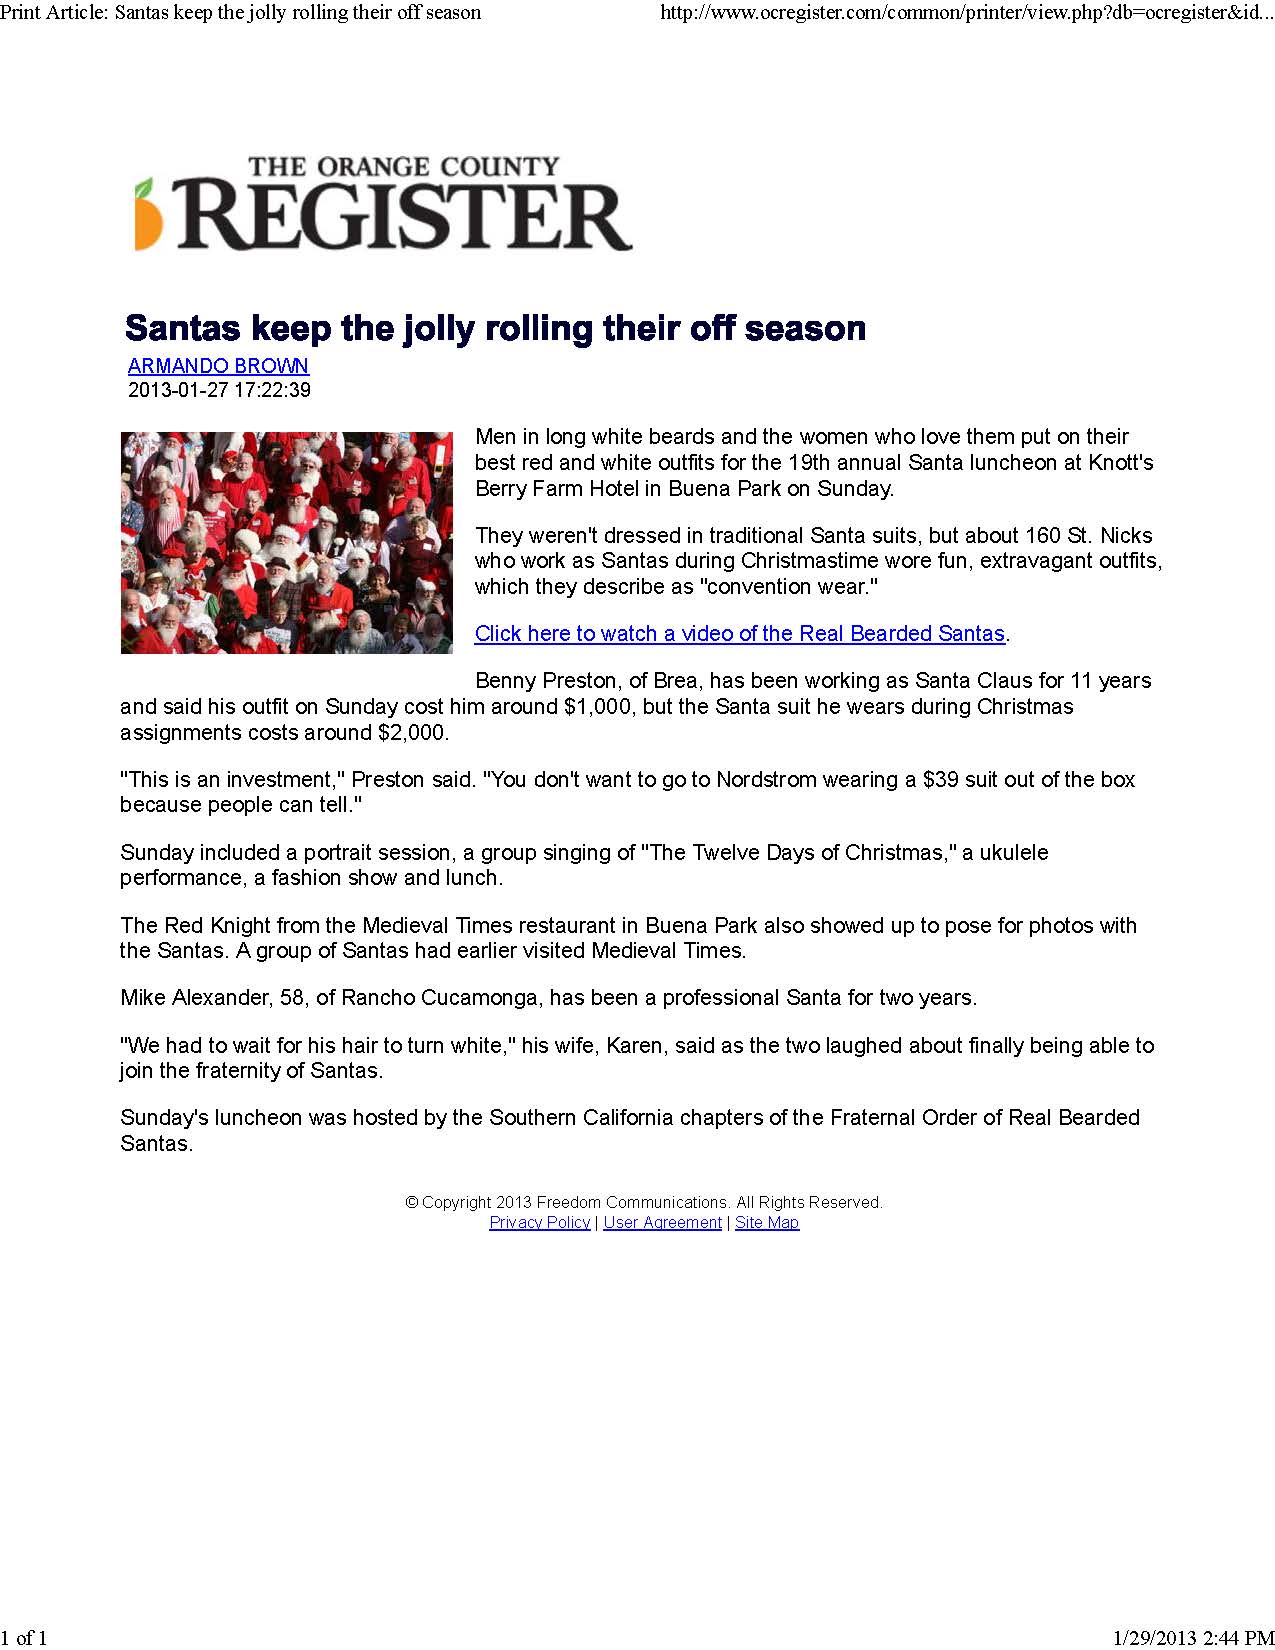 OC Register 2013